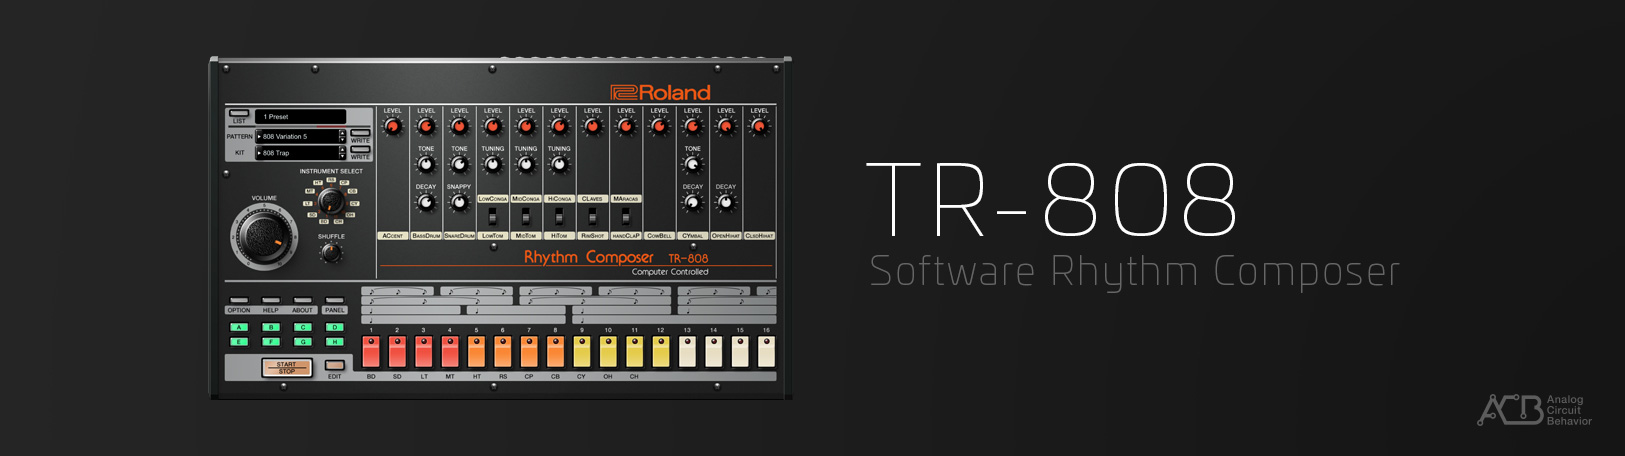 Roland vst free download